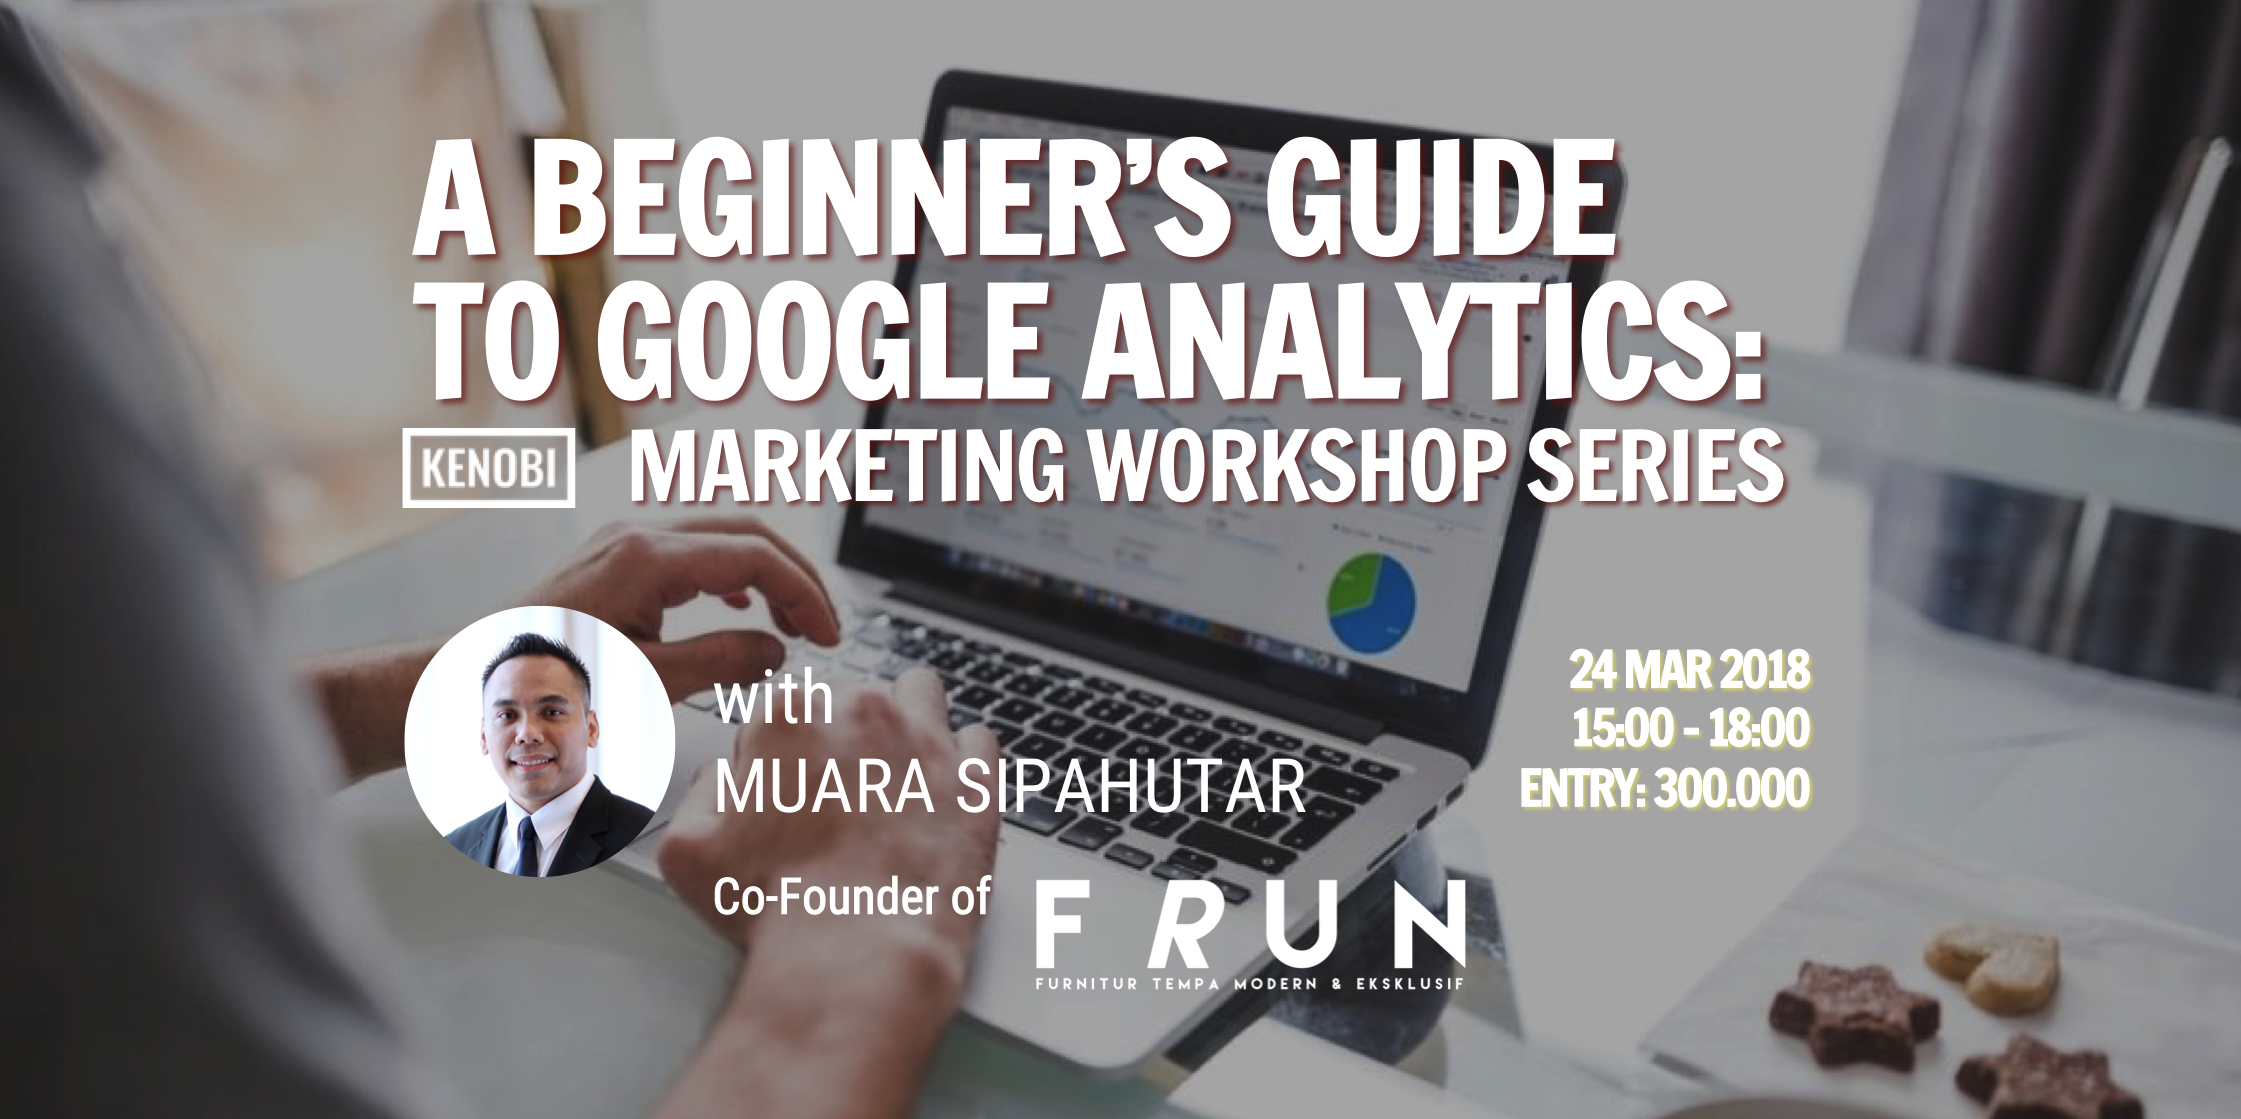 A Beginner's Guide to Google Analytics: Marketing Workshop Series